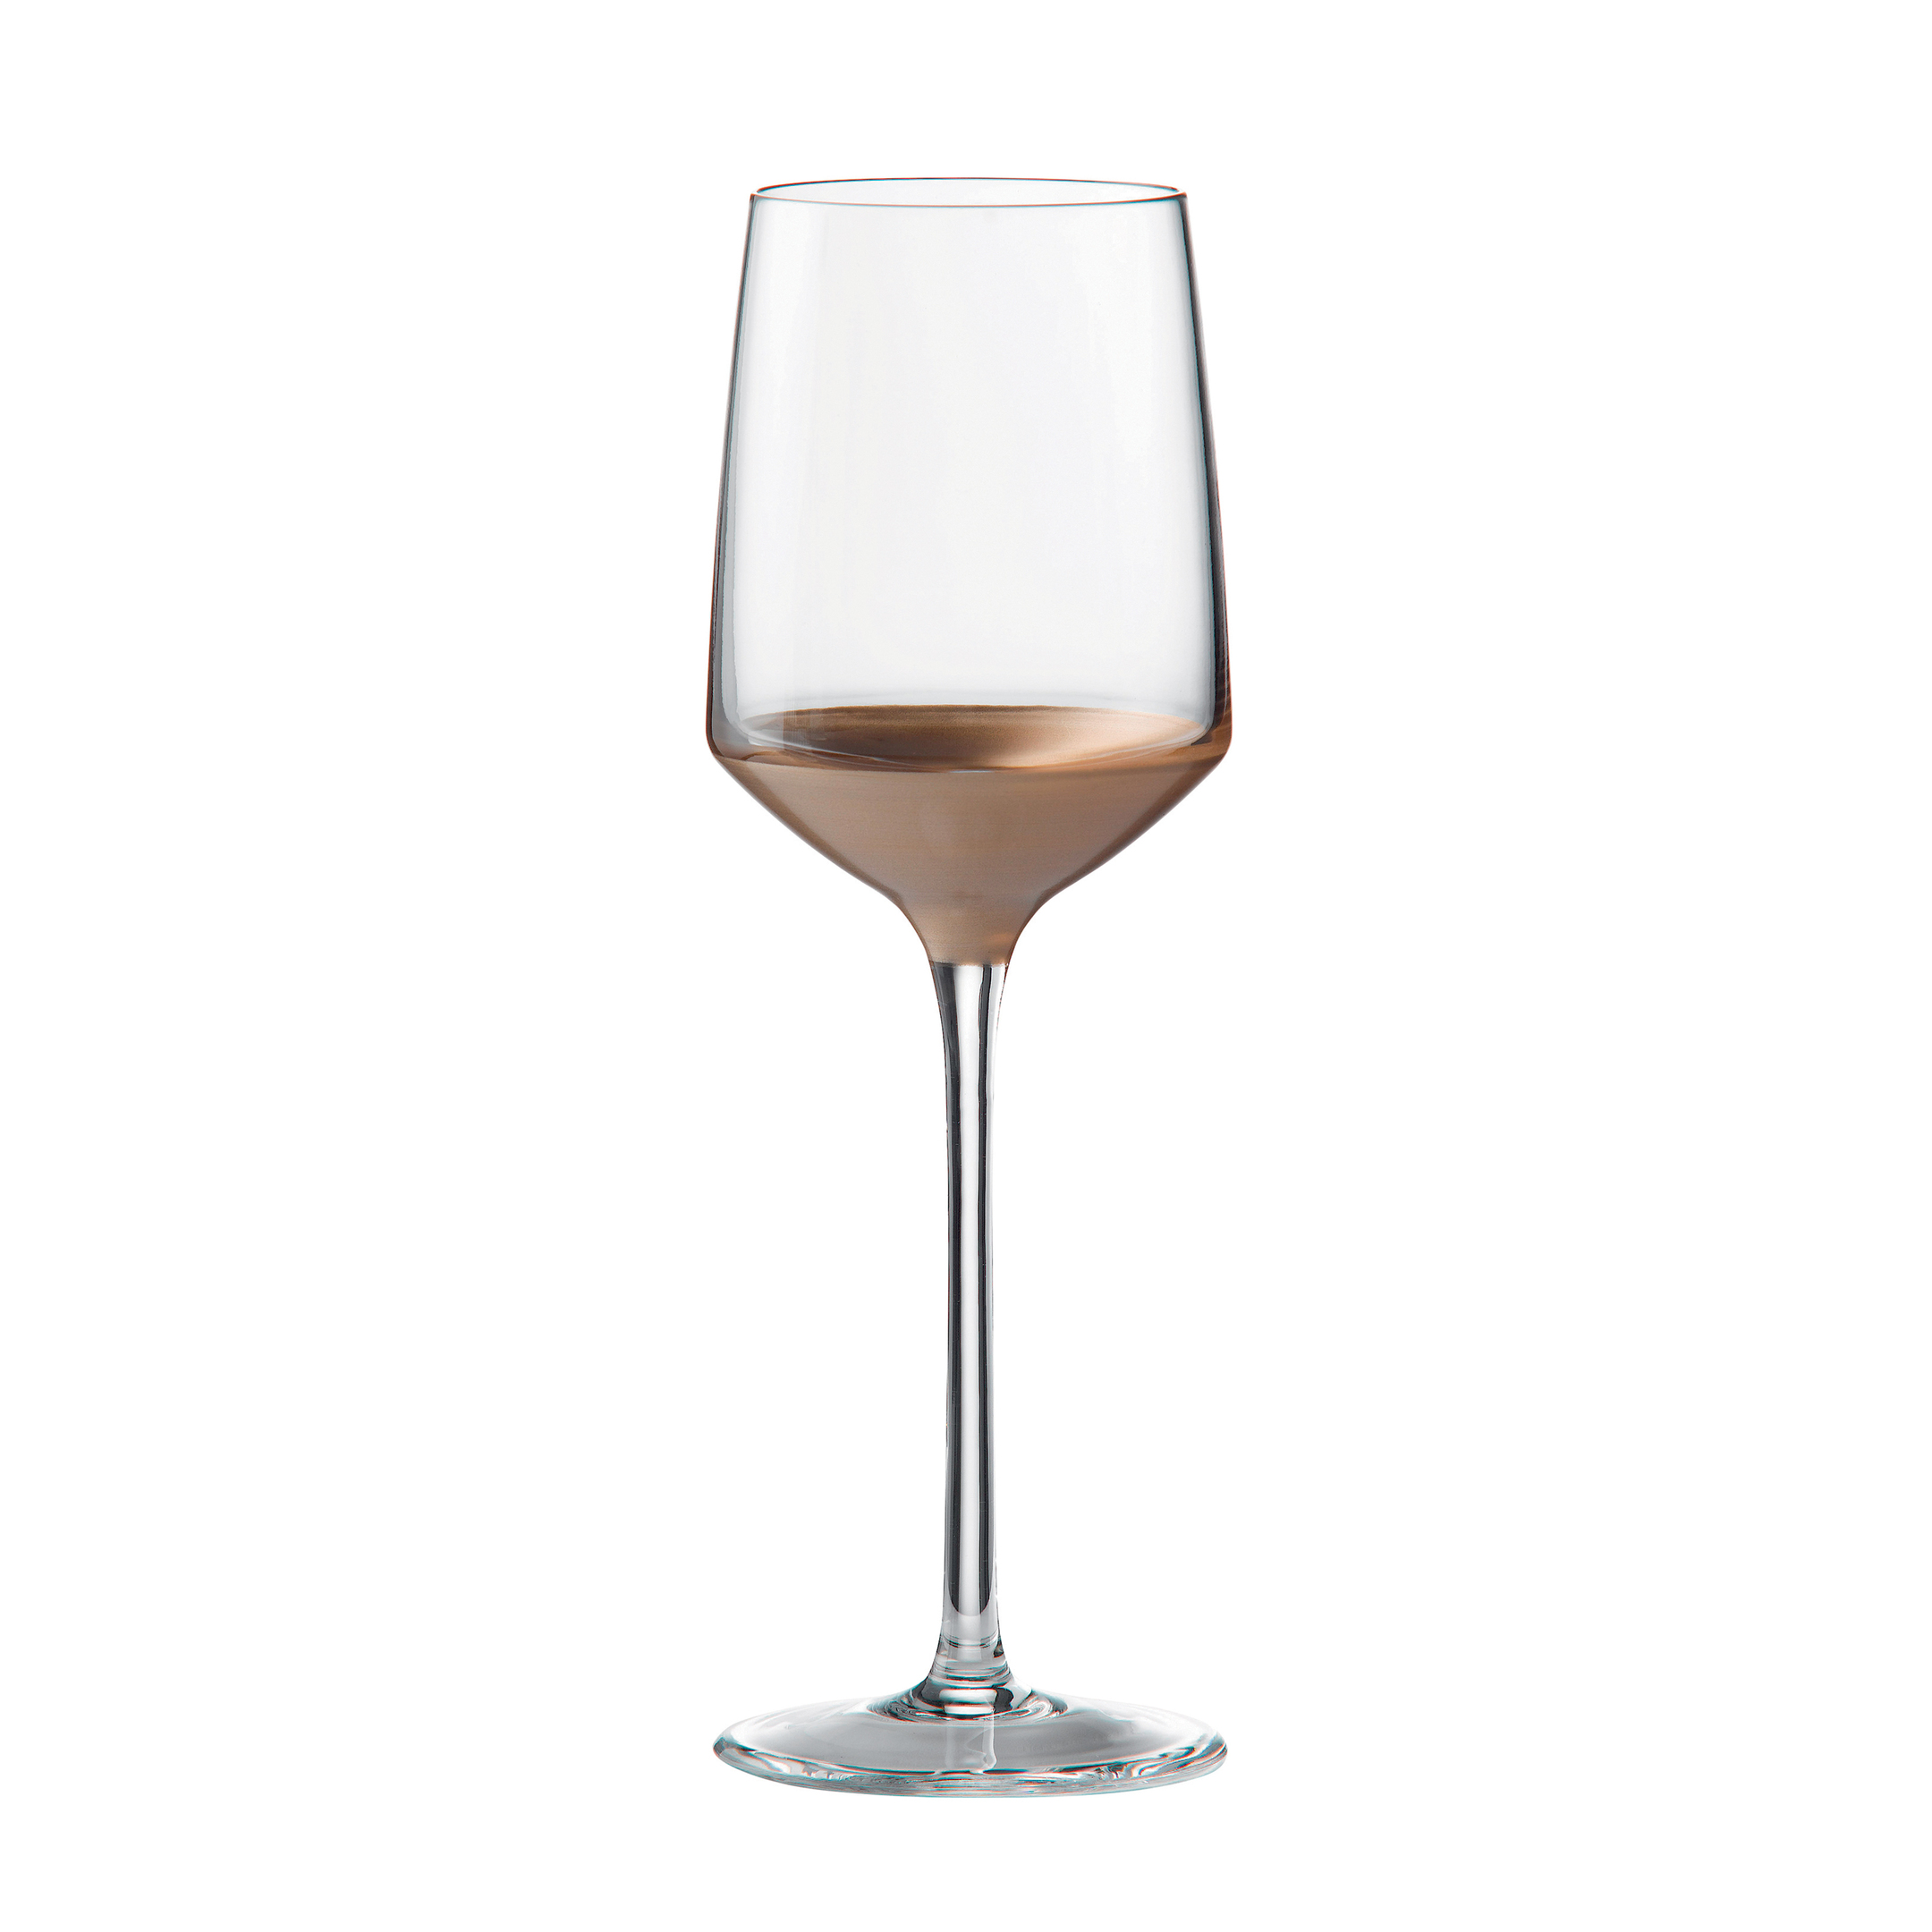 8 Wedgwood Arris Wine Glasses - Set of 2 - Small